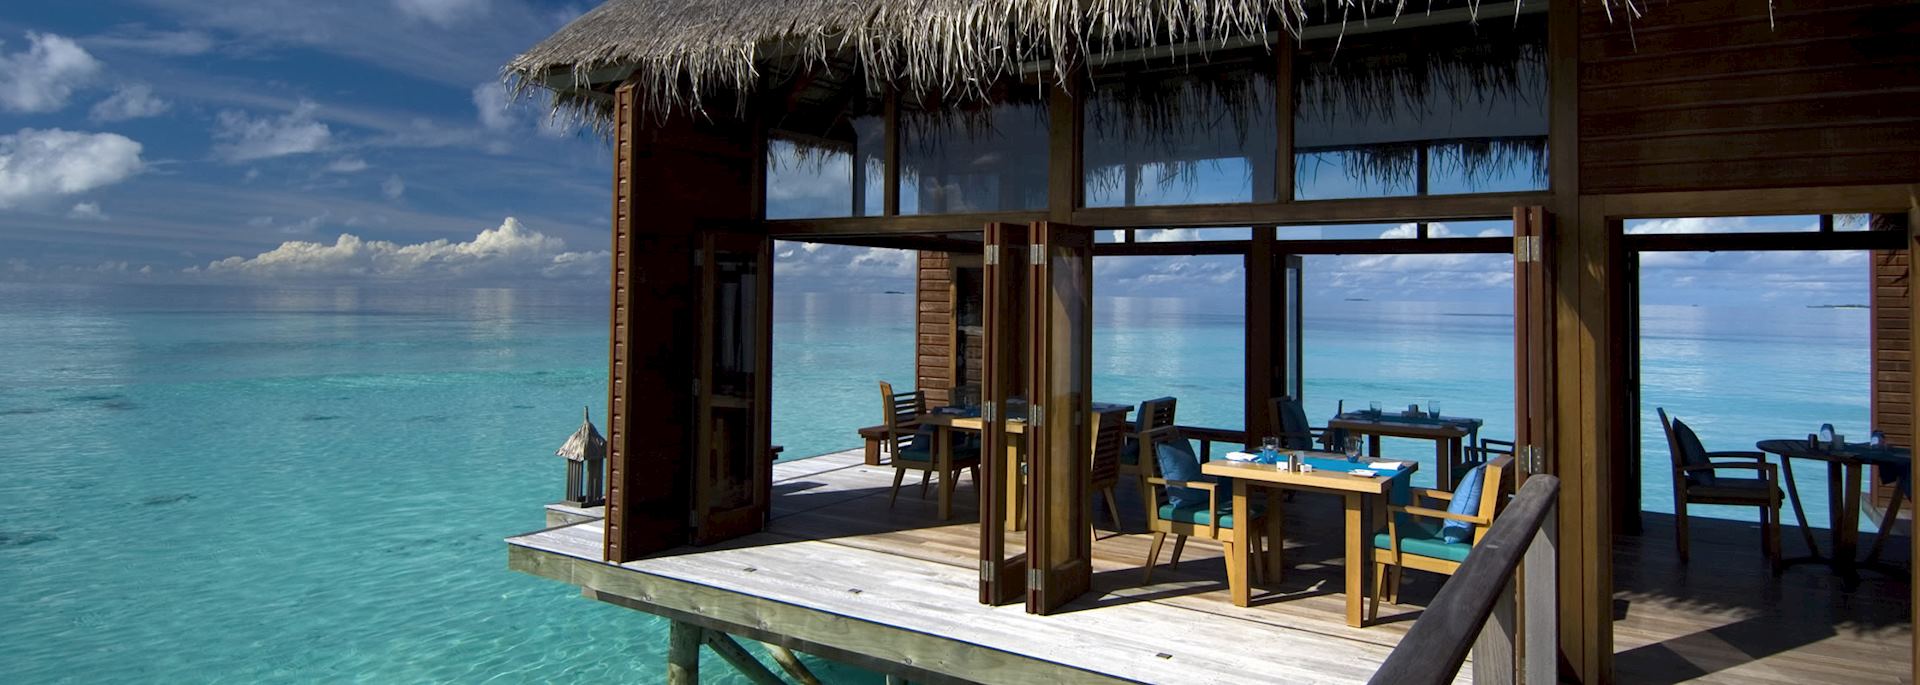 The overwater restaurant at the Conrad Maldives Rangali Island, Maldives